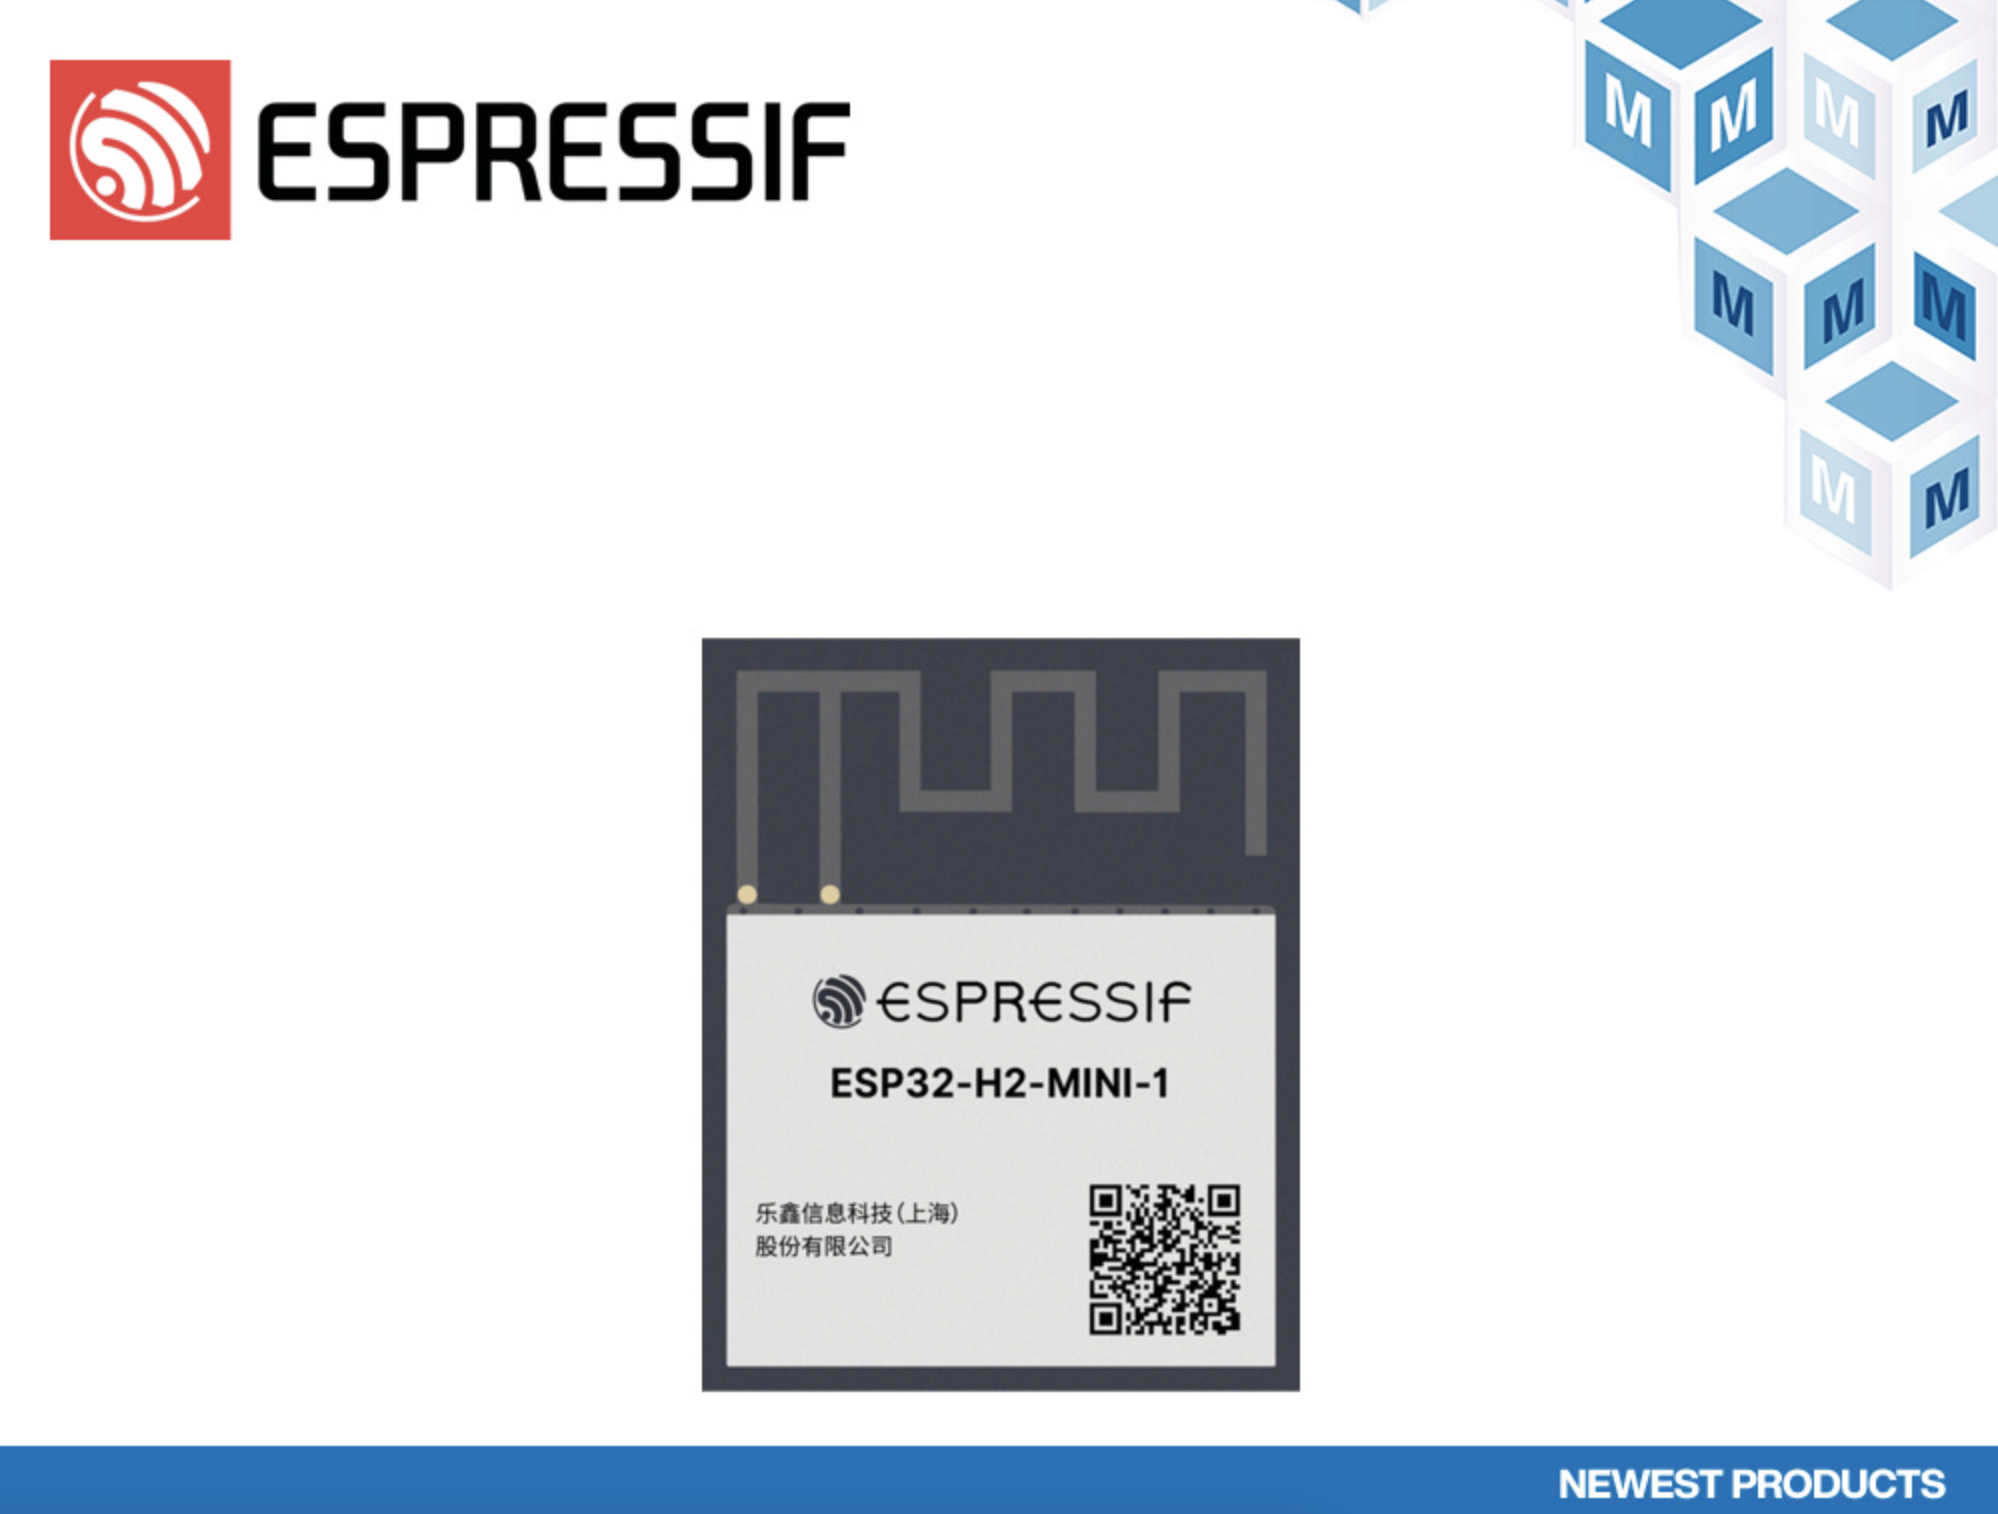 泽供应适用于Matter IoT应用的Espressif Systems ESP32-H2-MINI-1x BLE + IEEE 802.15.4模组